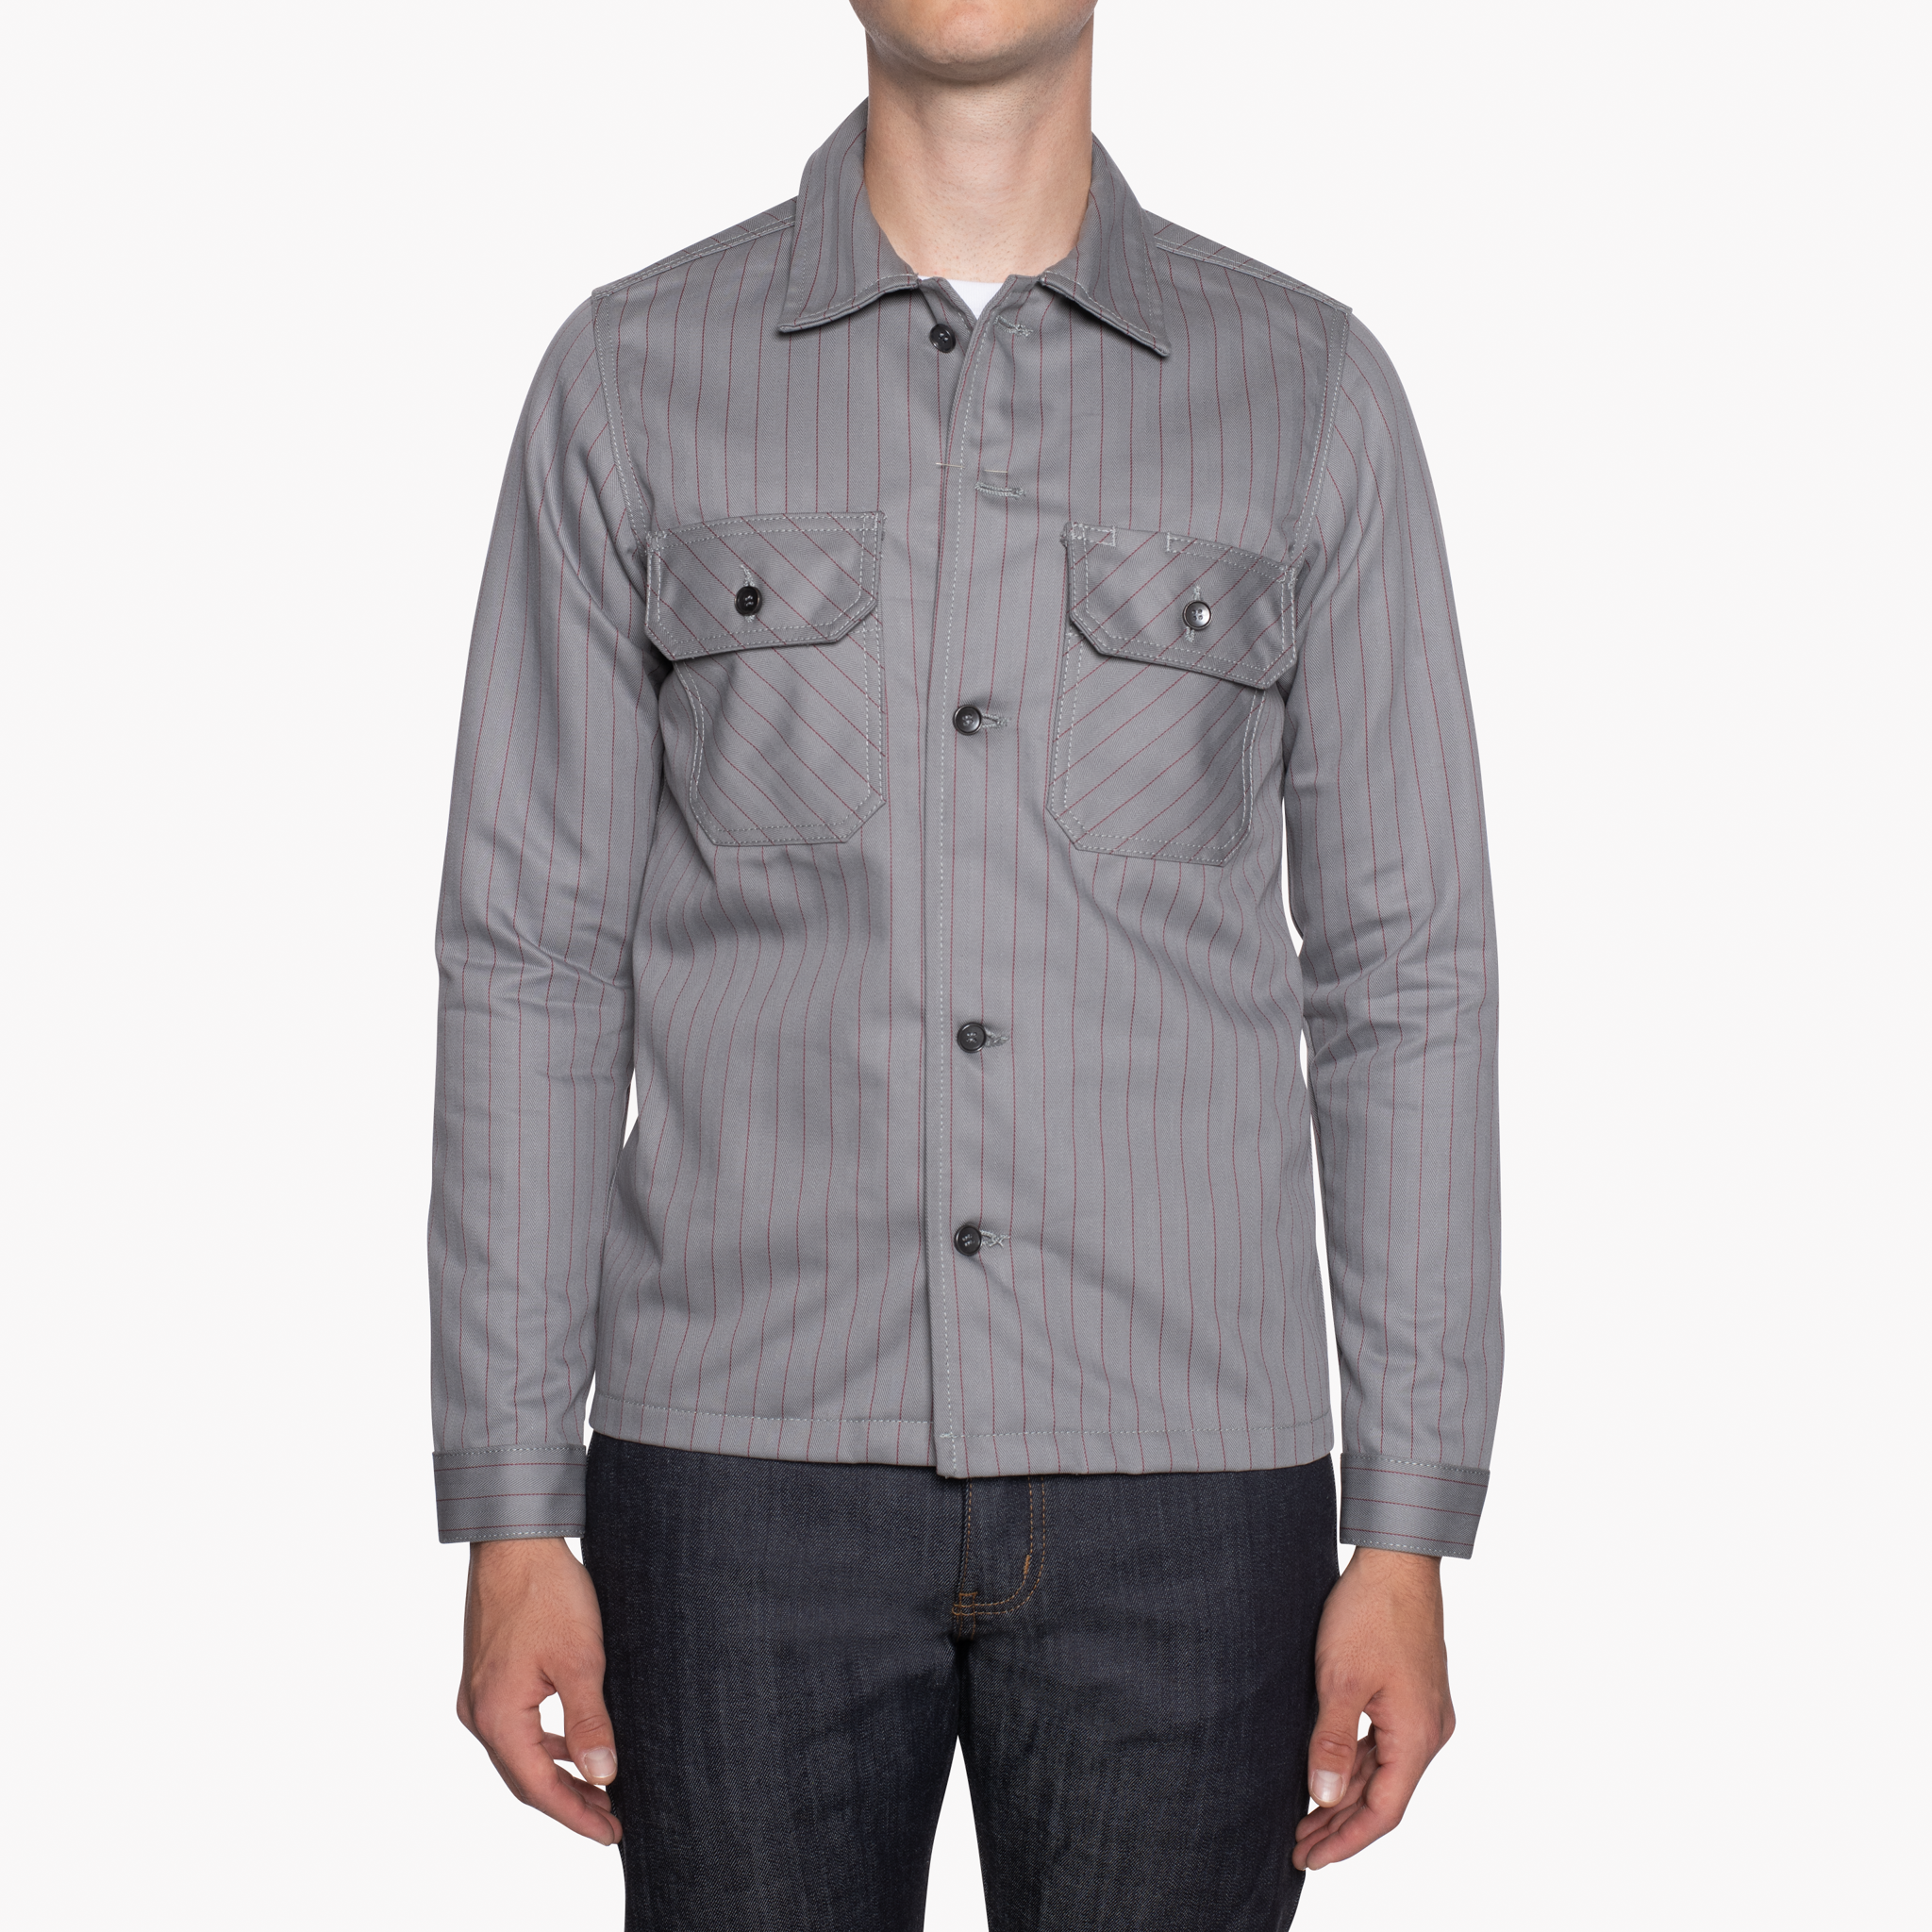  Work Shirt - Repro Workwear Twill - Grey - front 